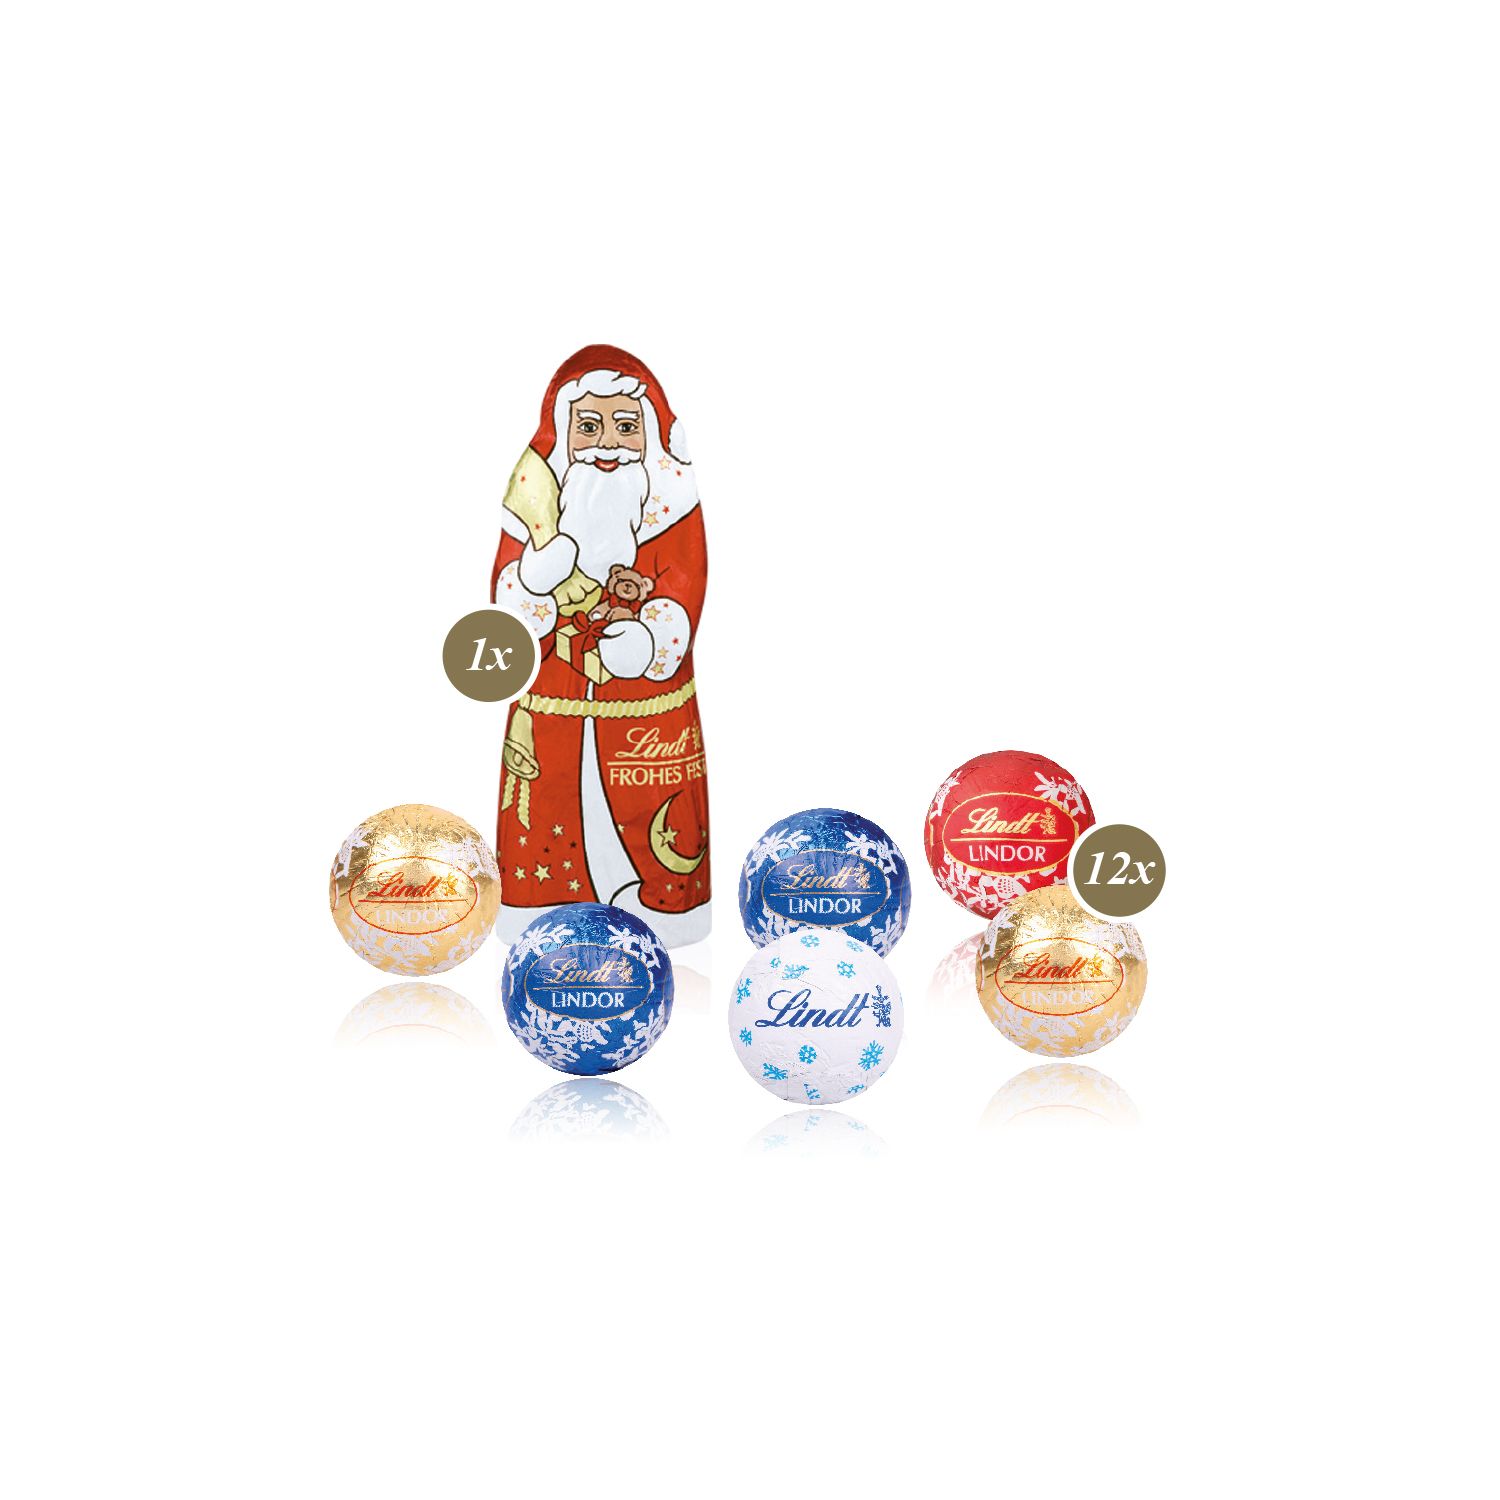 Graspapier Geschenktüte Lindt Santa & Minis, inkl. 4-farbigem Druck